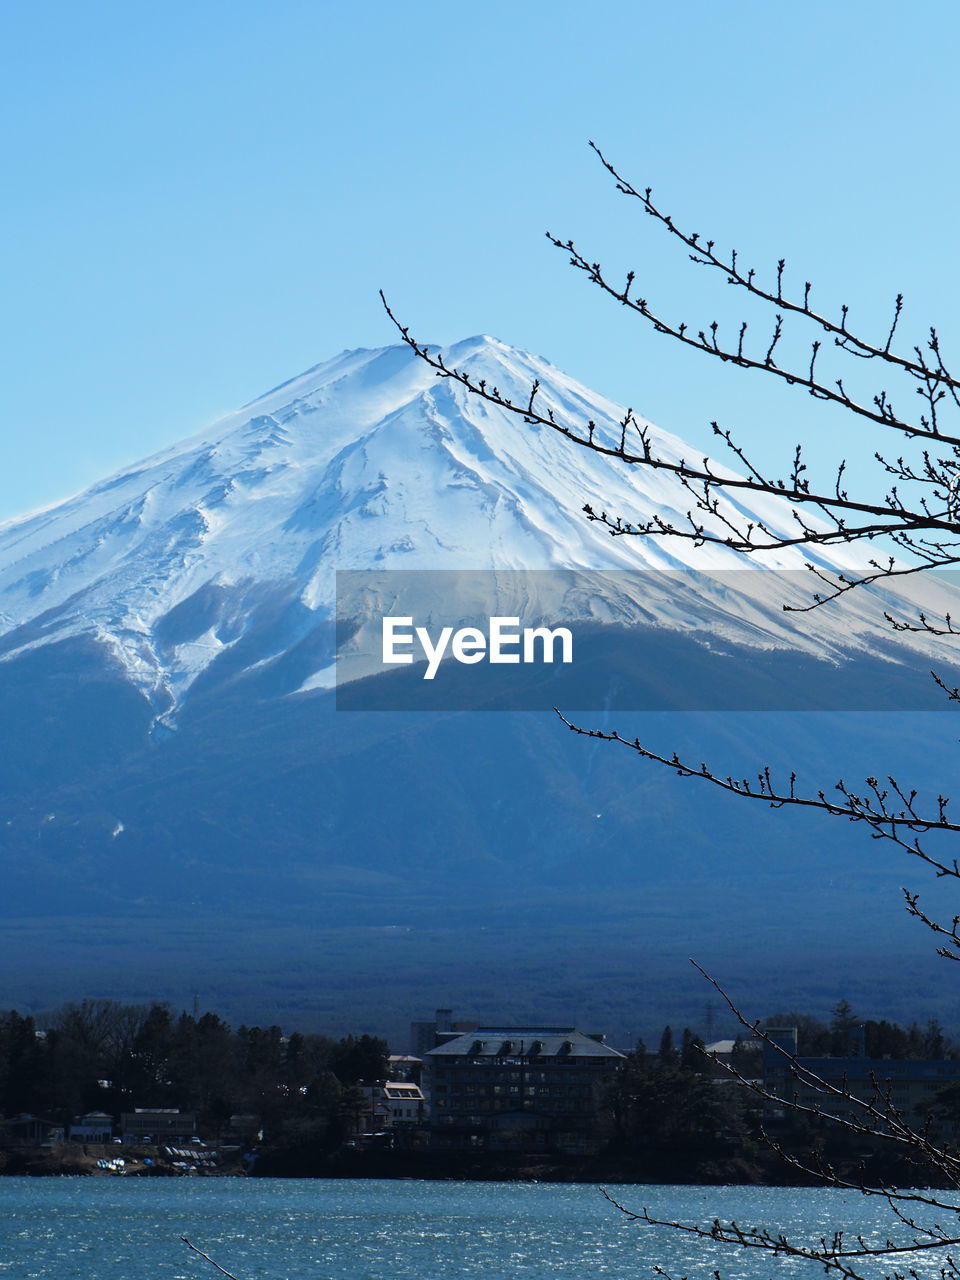 Mount fuji views in winter.